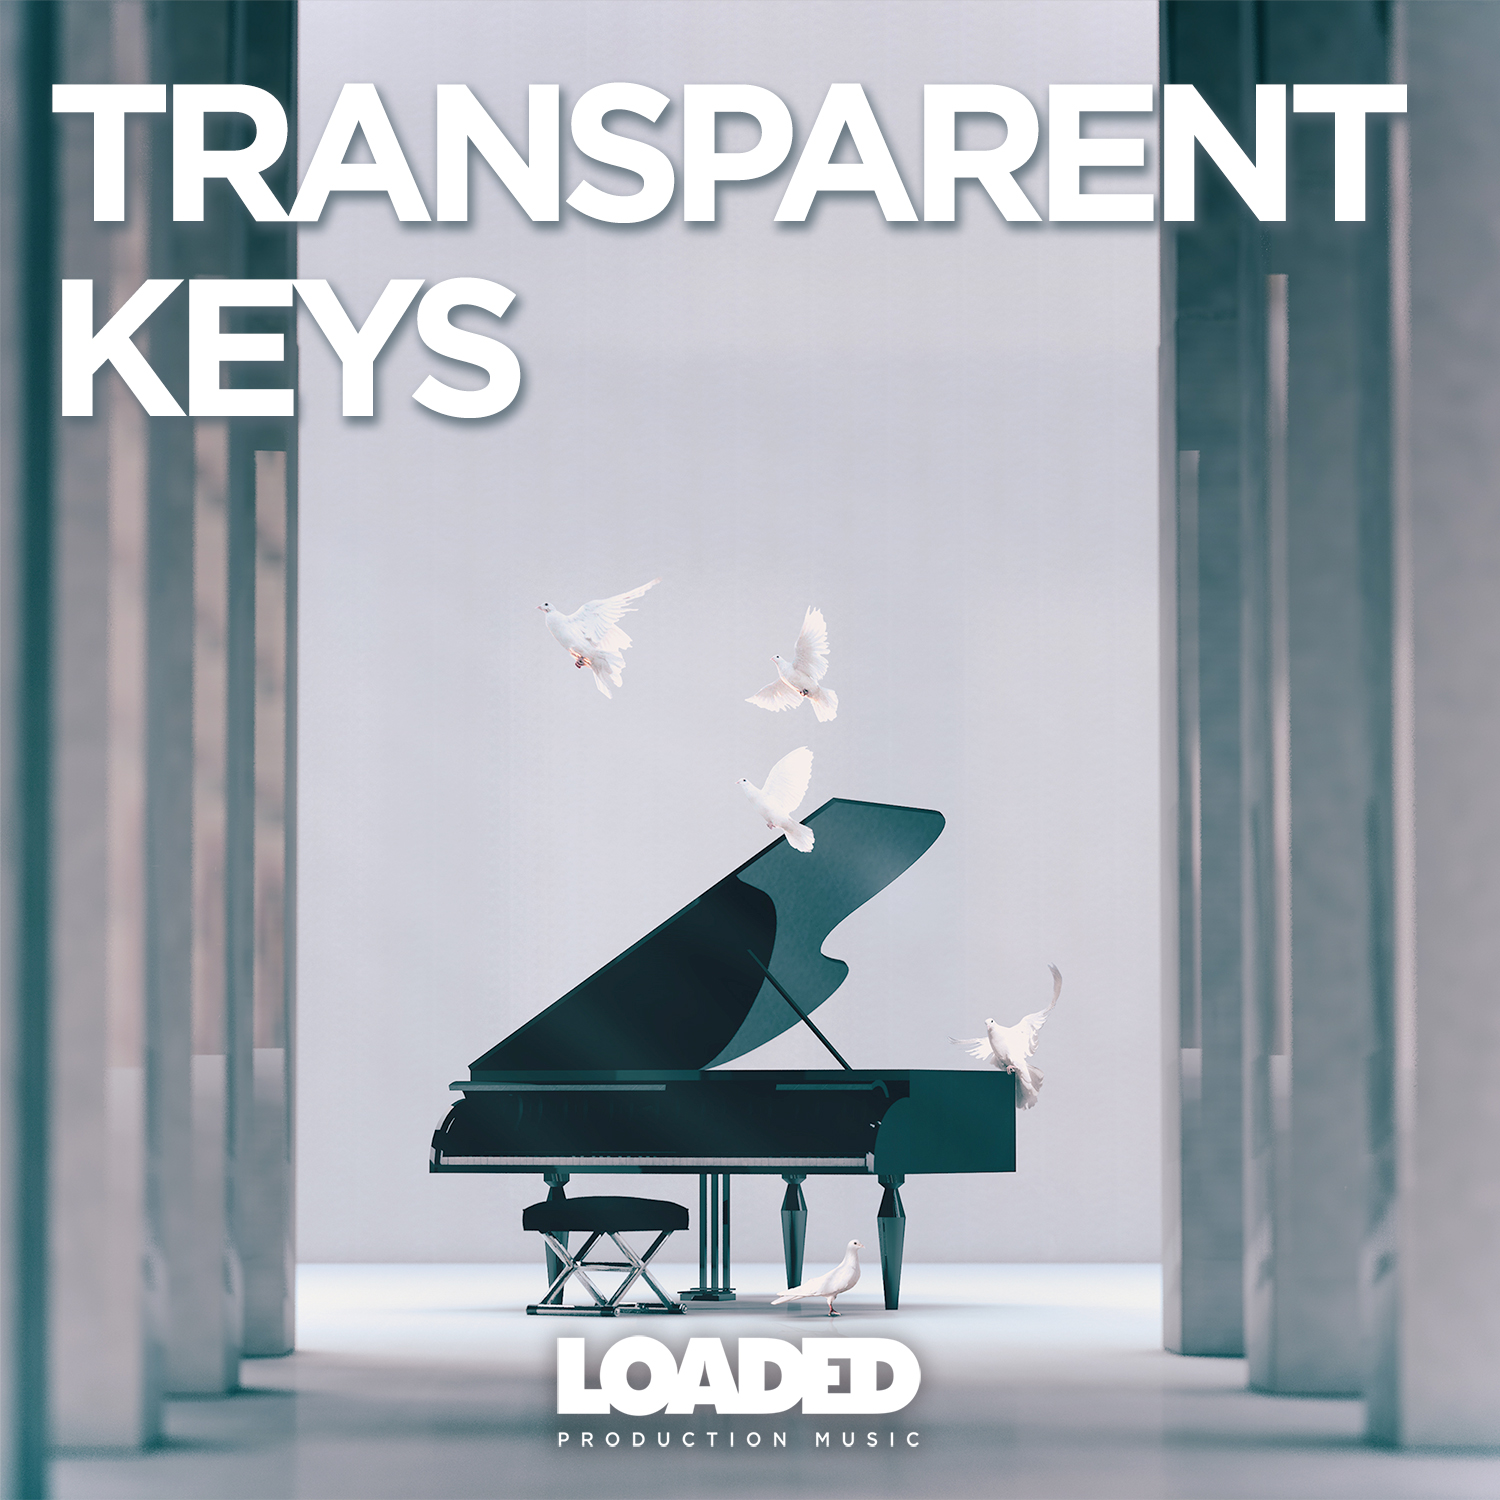 LPM 128 - Transparent Keys - Album Cover